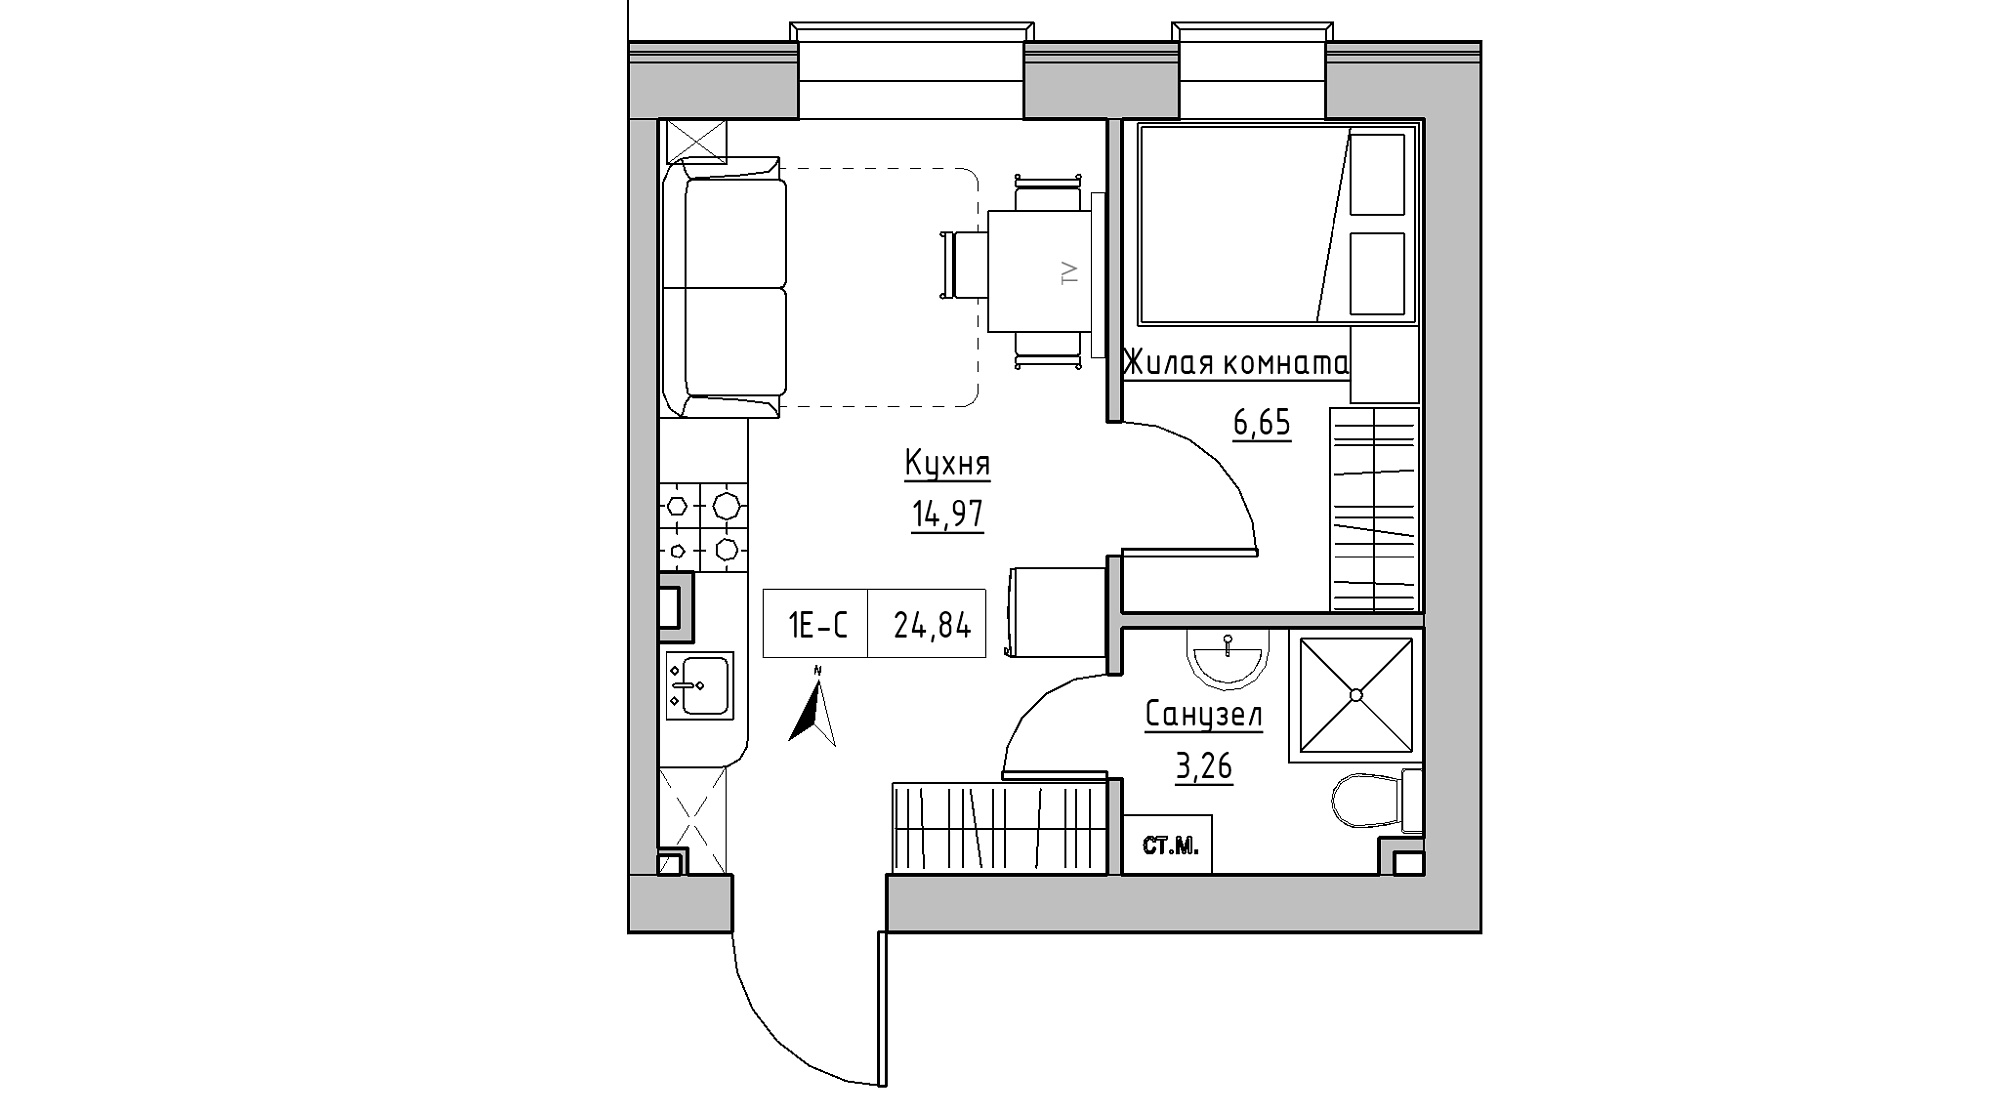 Planning 1-rm flats area 24.84m2, KS-013-01/0010.